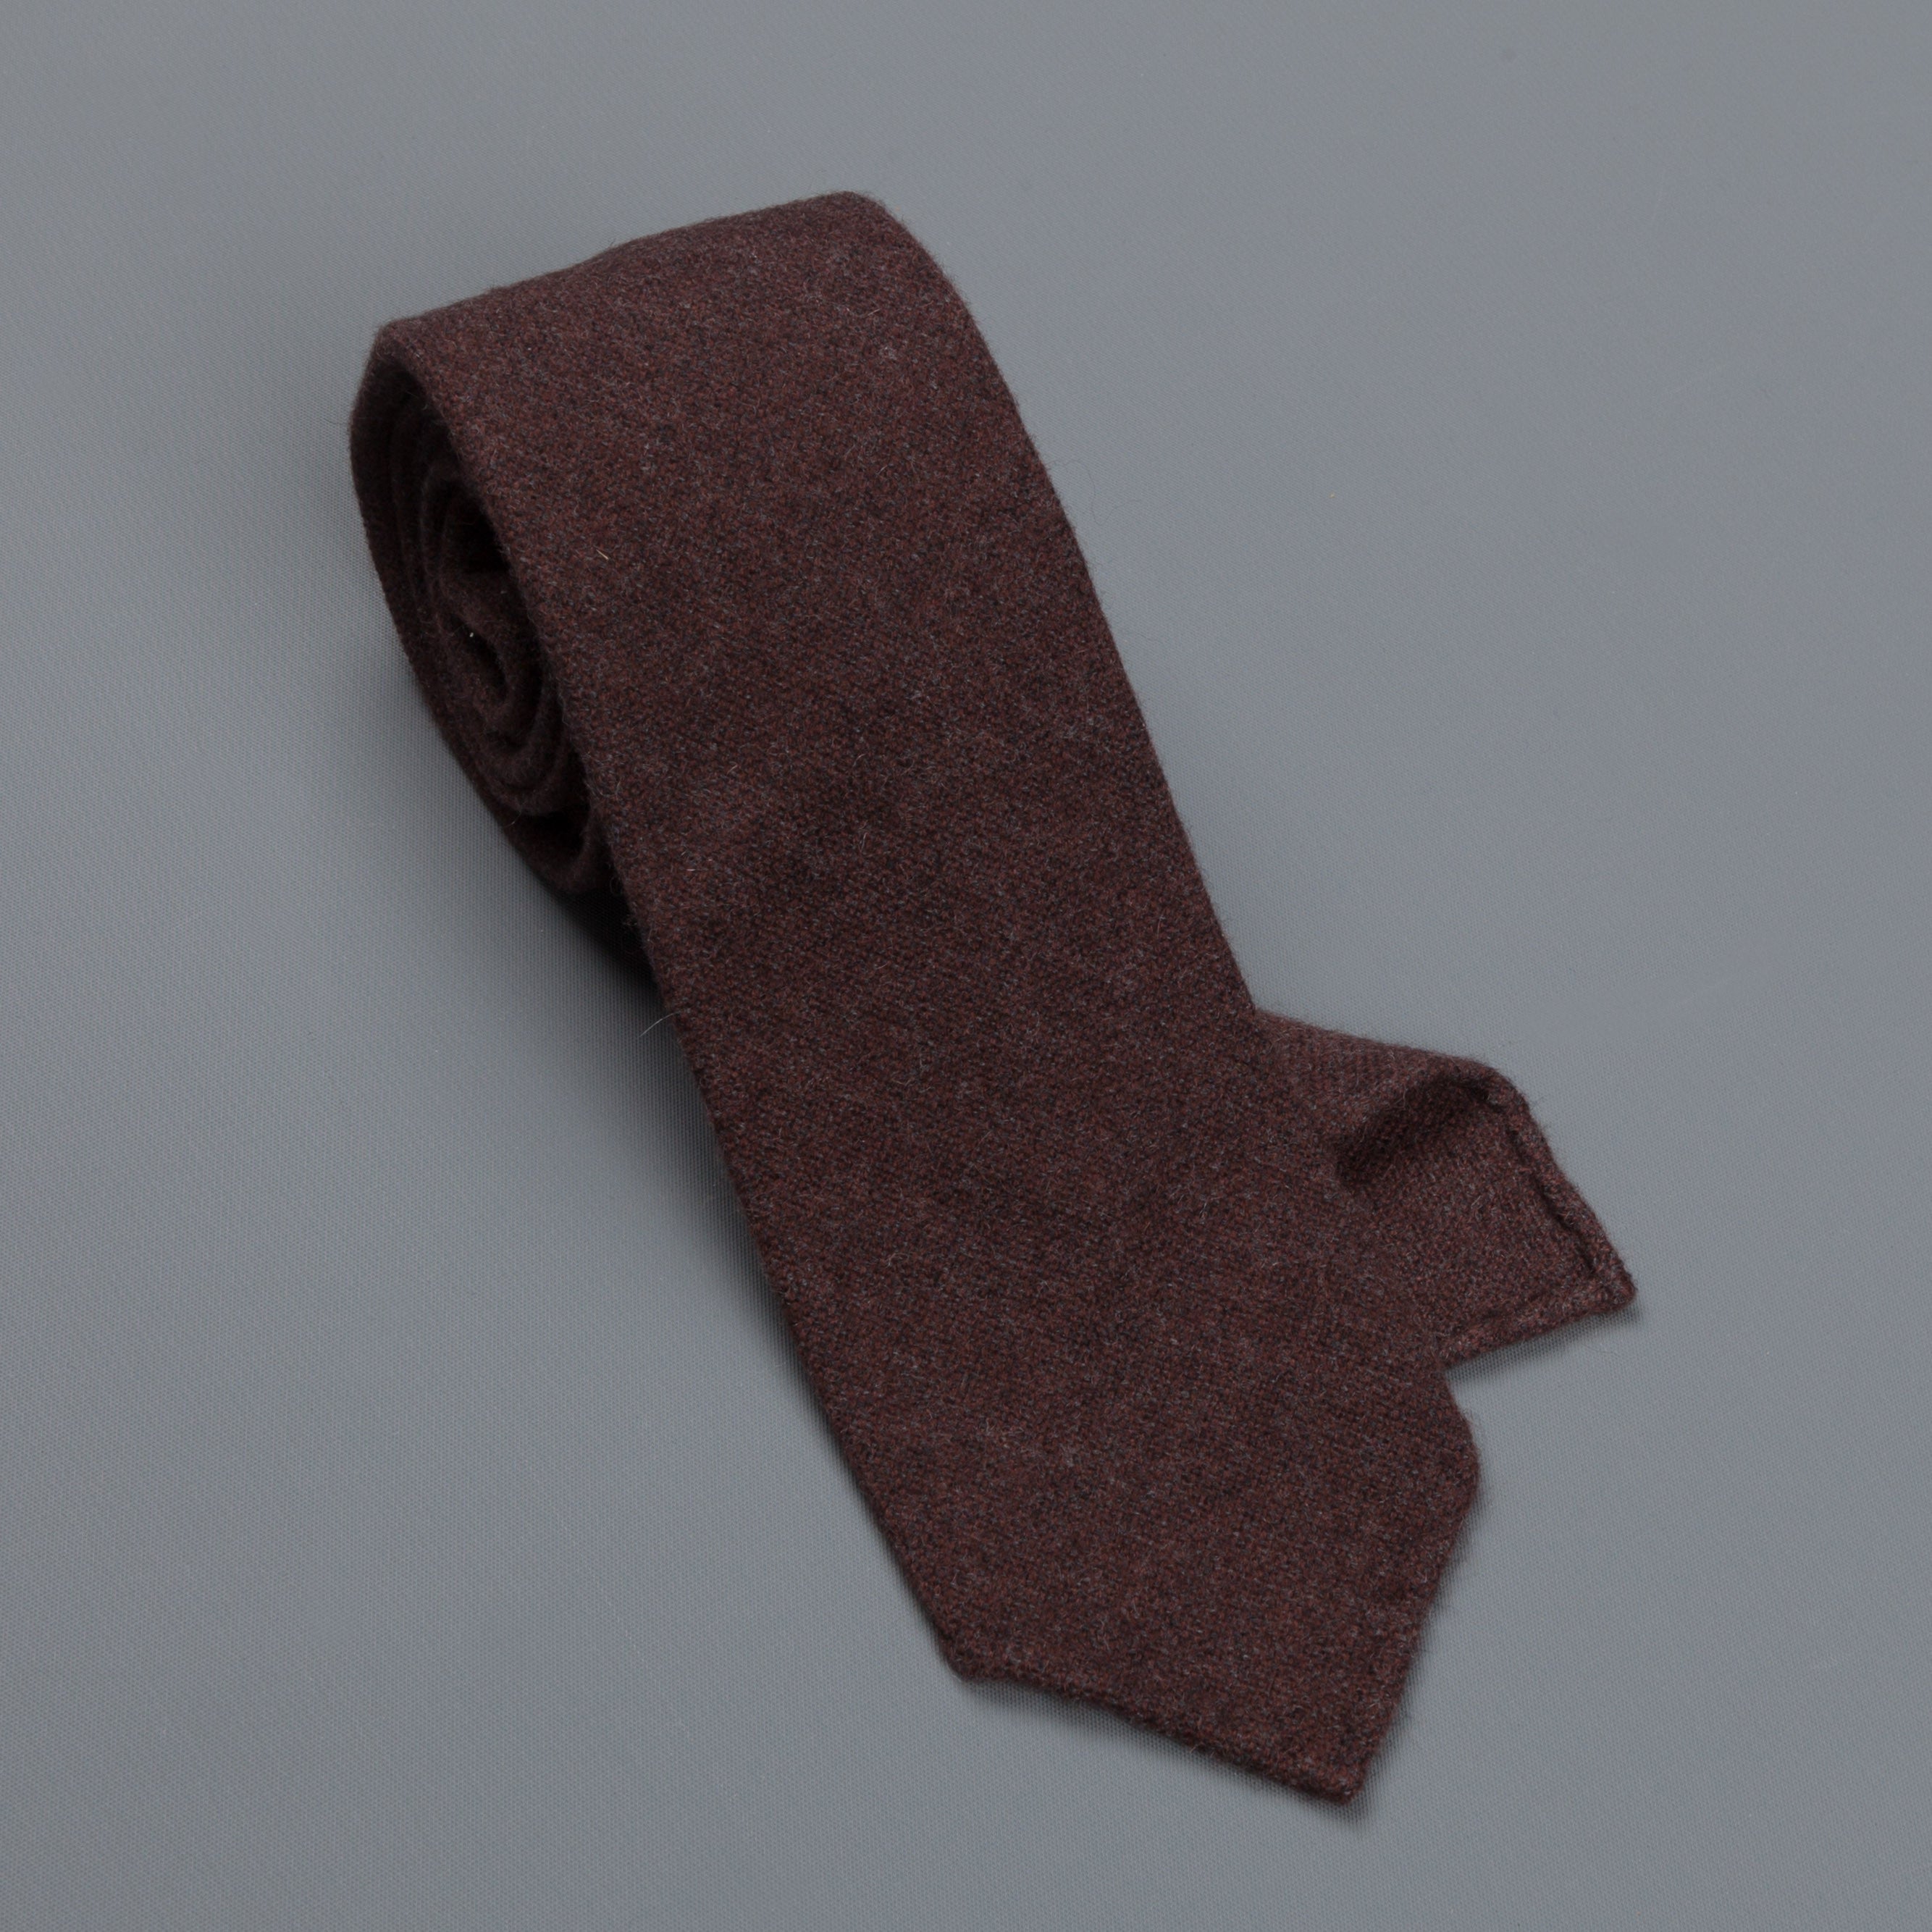 Drakes Cashmere tie, untipped dk brown melange